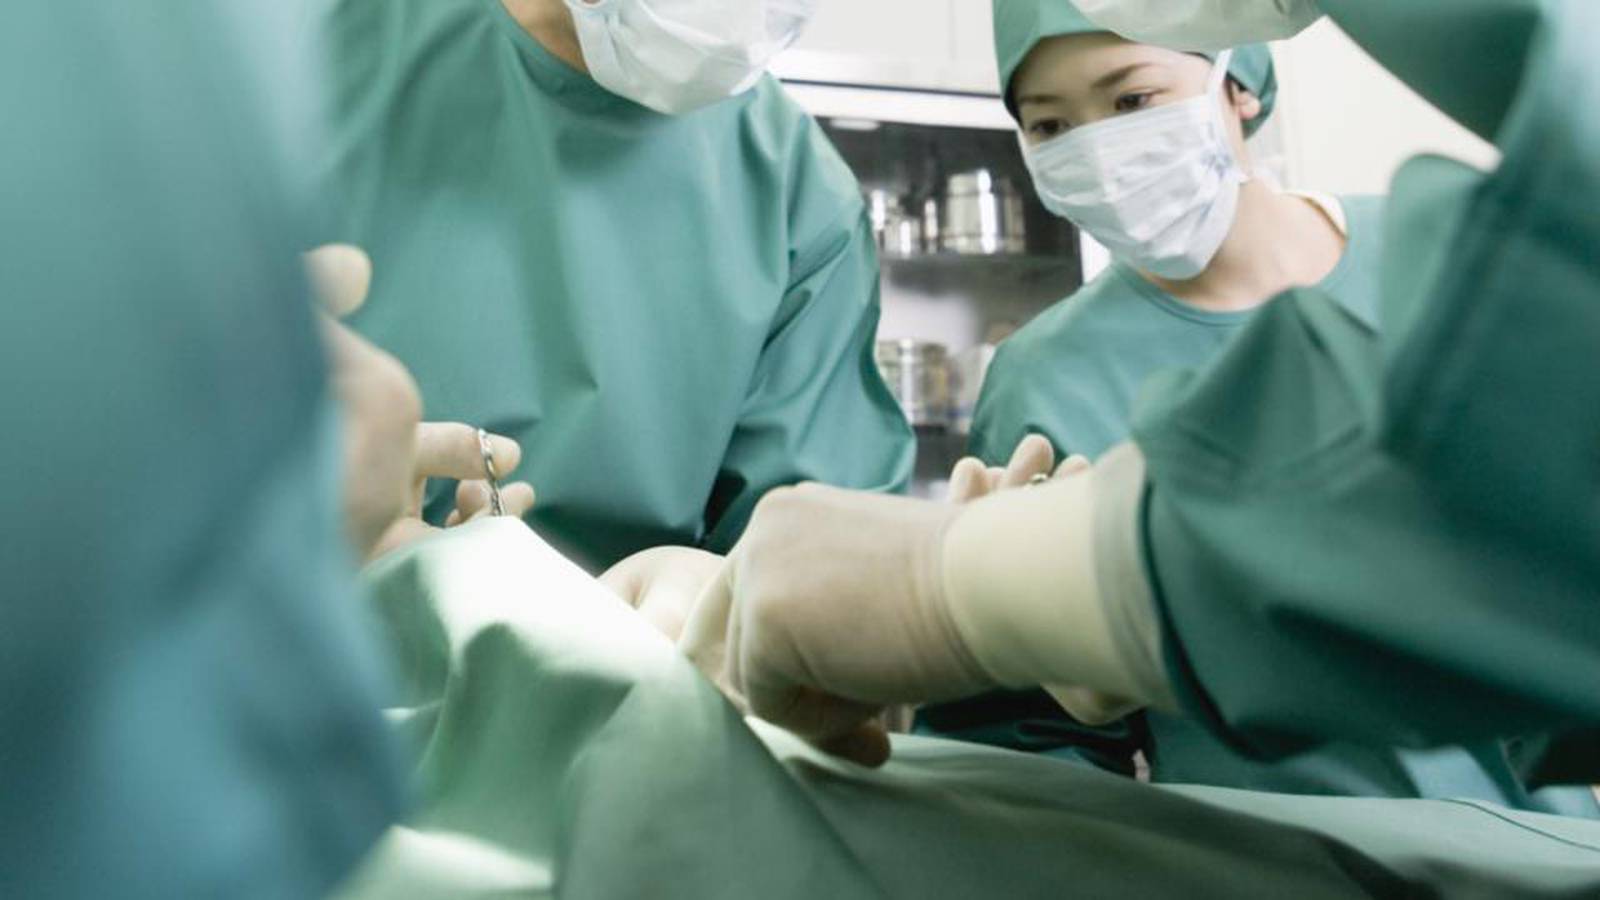 gender reassignment surgery cost ireland